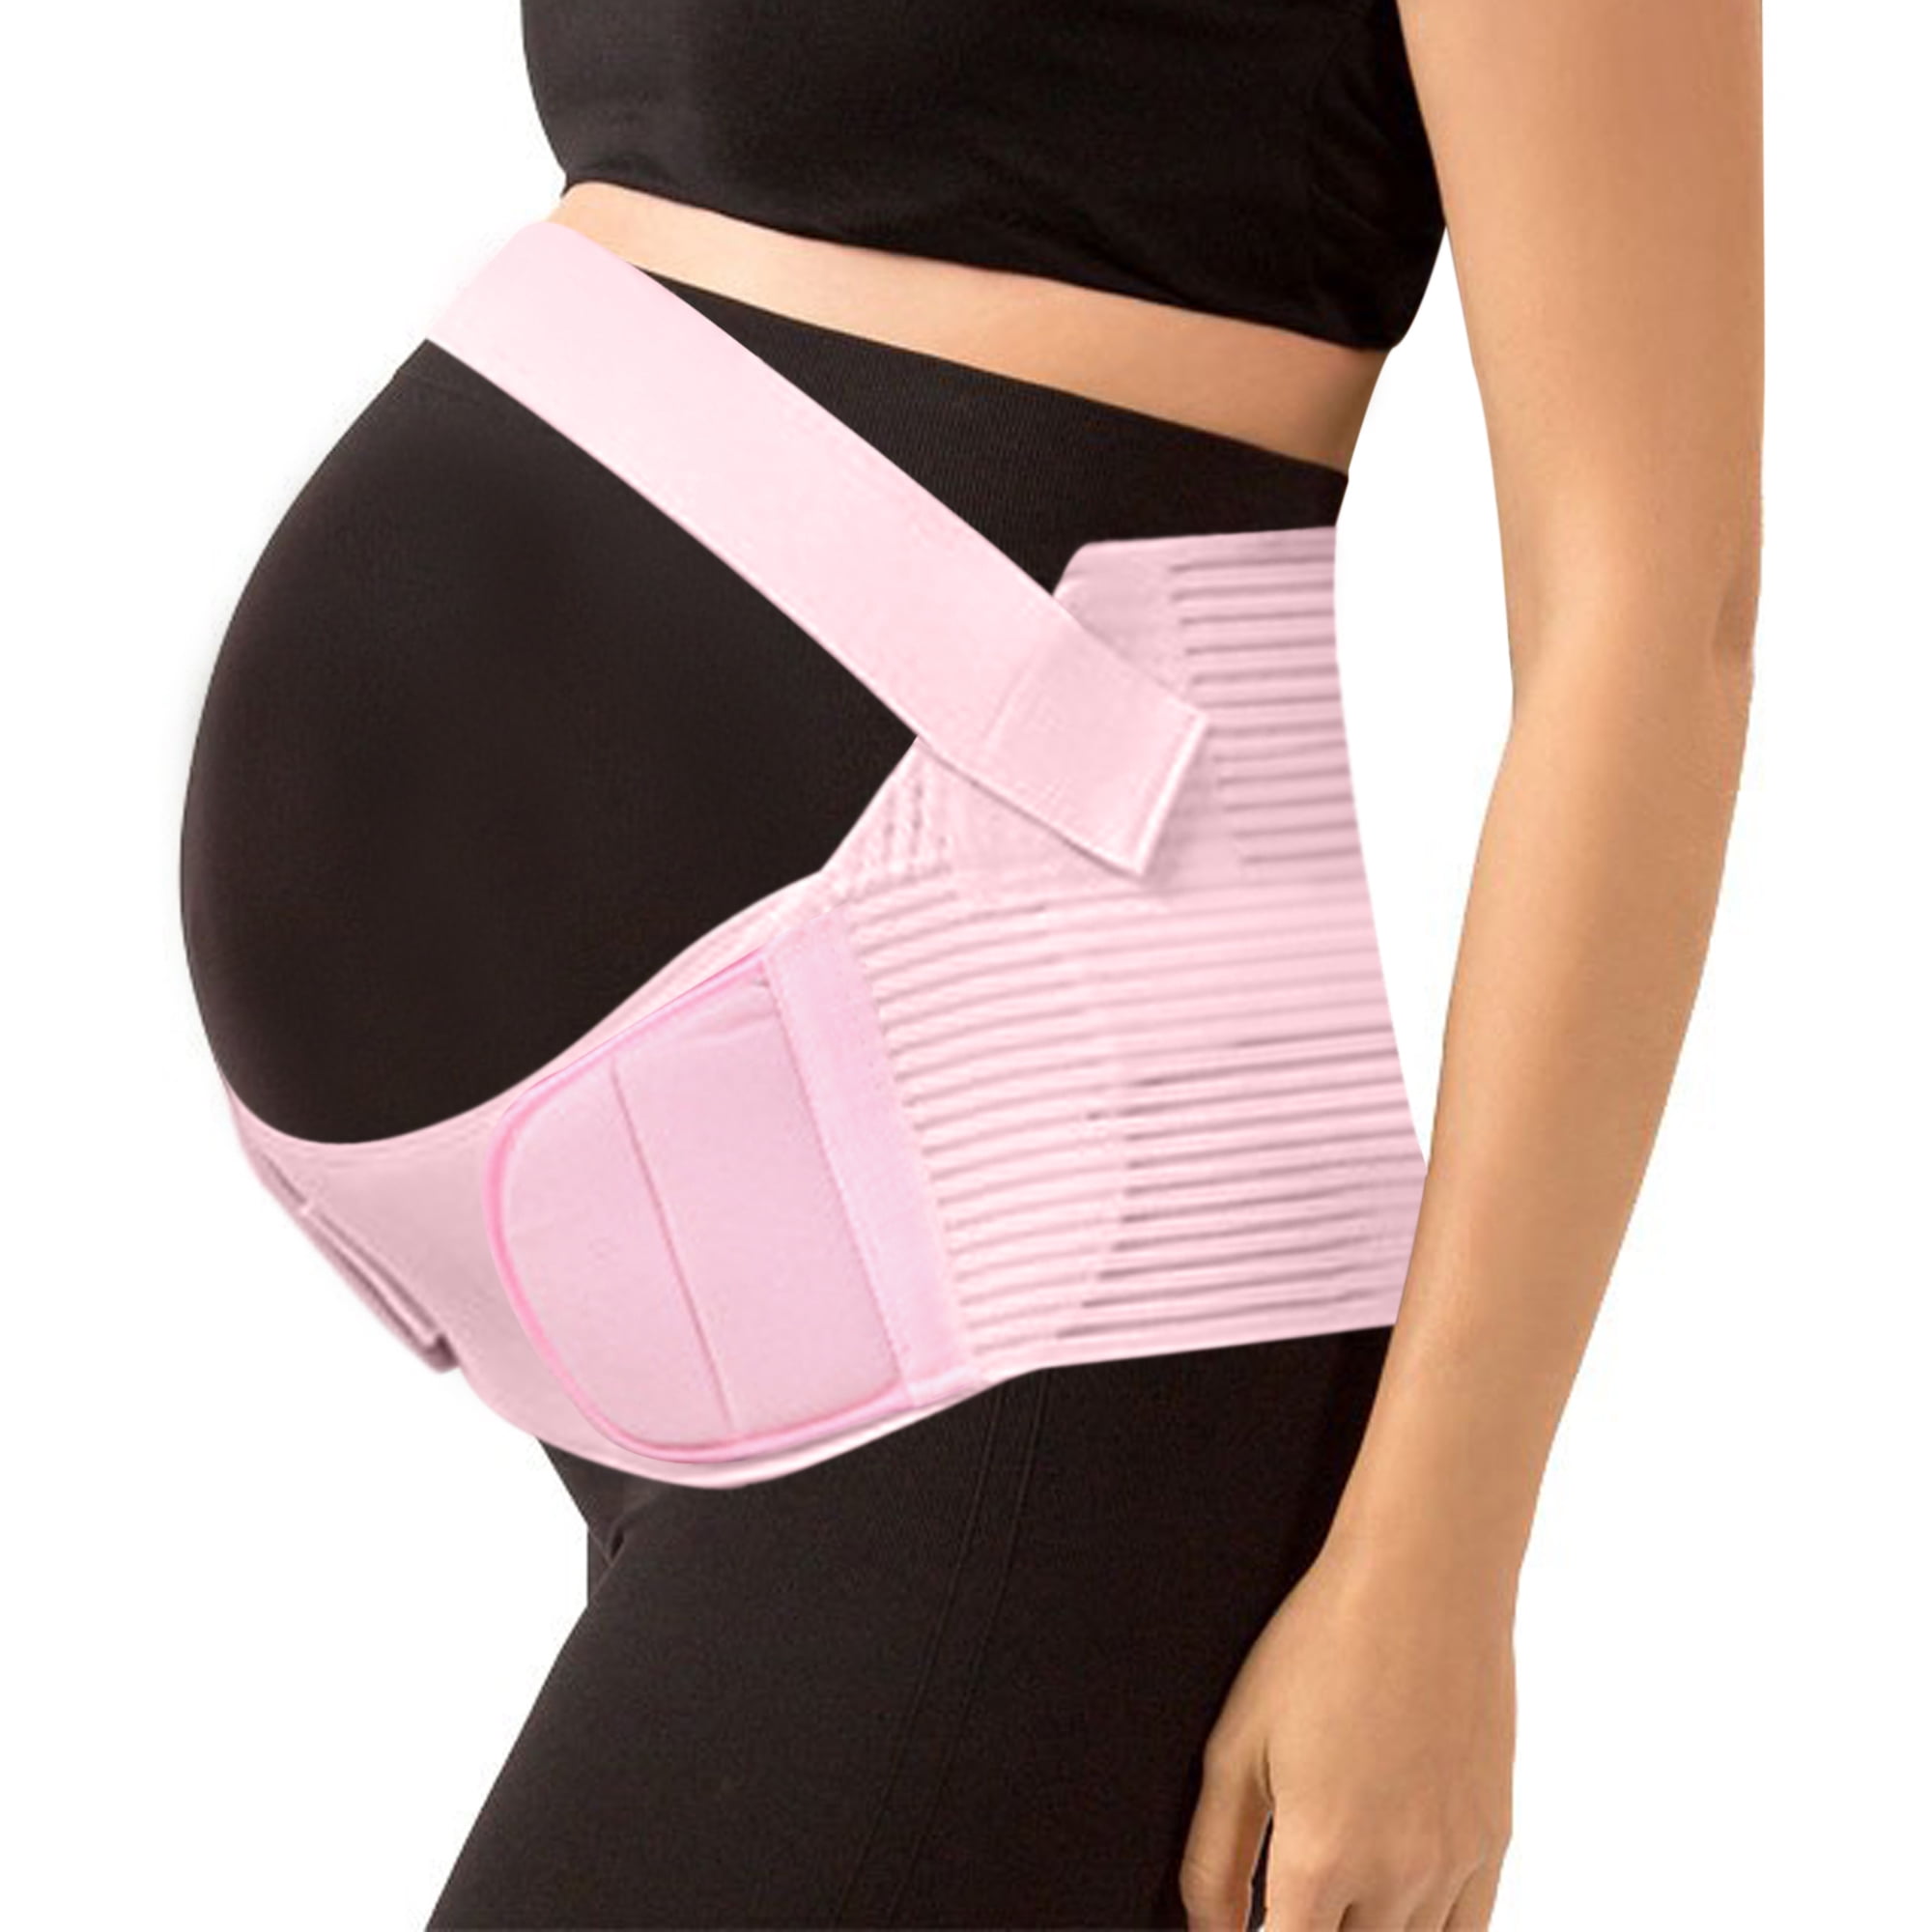 Latest Maternity Belt Pregnancy Belly Support Band Anti-Slip Breathable Brace 